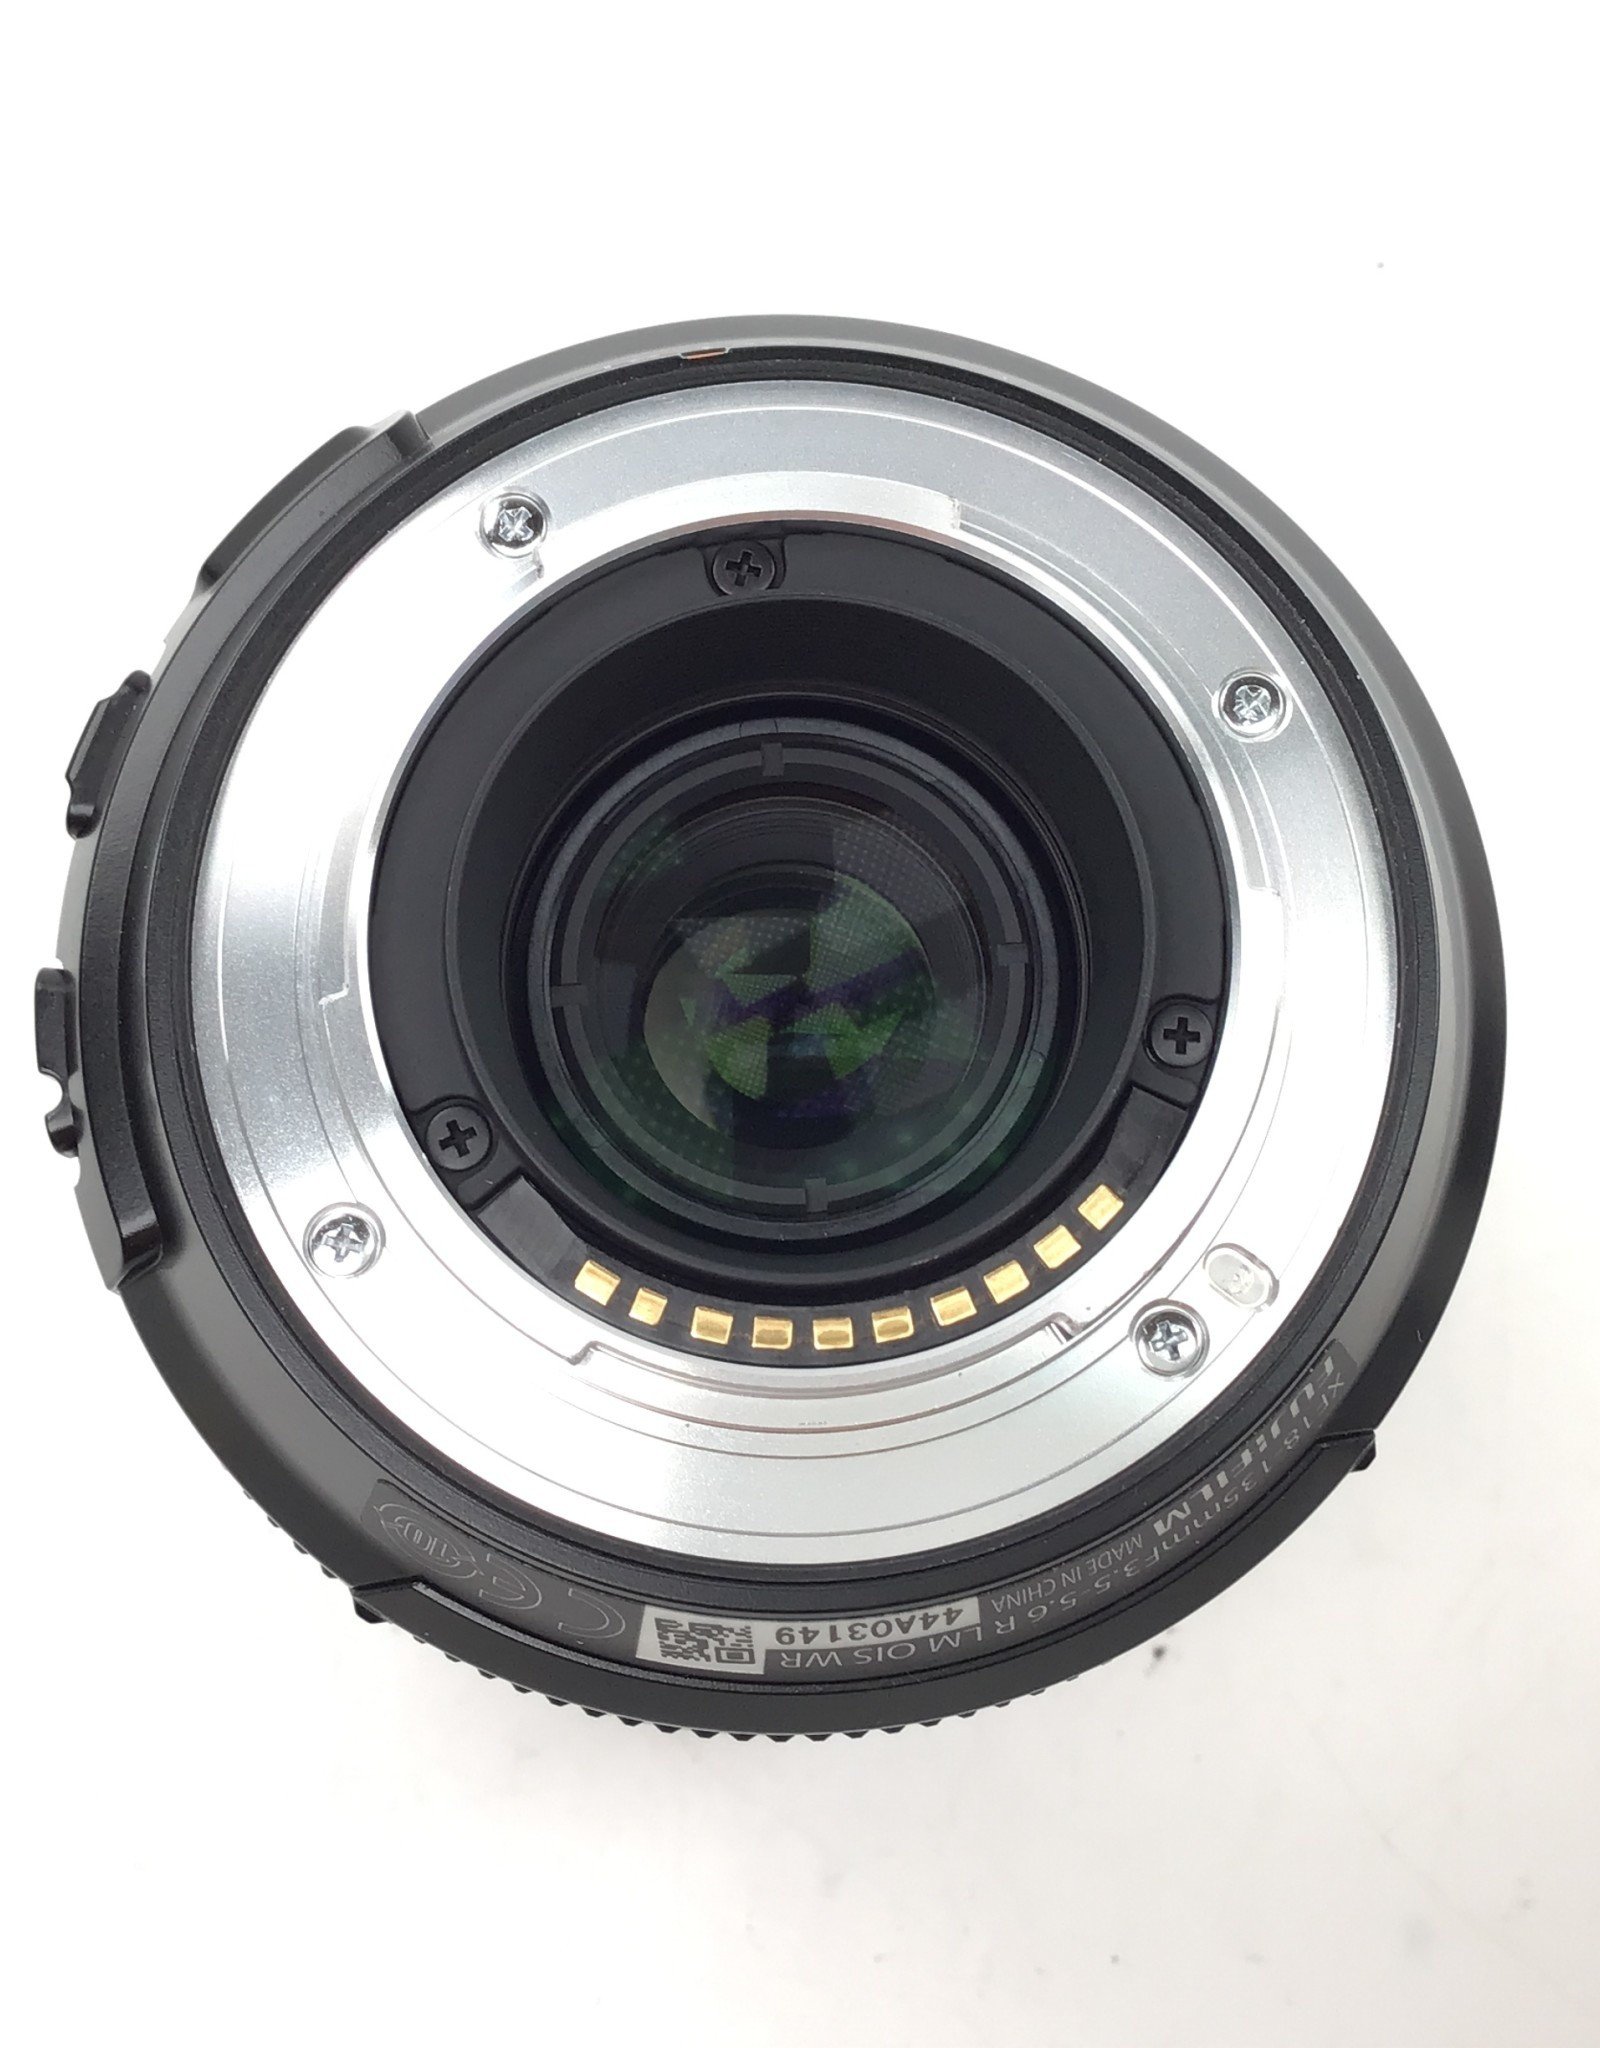 FUJI Fuji Super EBC XF 18-135mm f3.5-5.6 LM OIS WR Lens Used Good